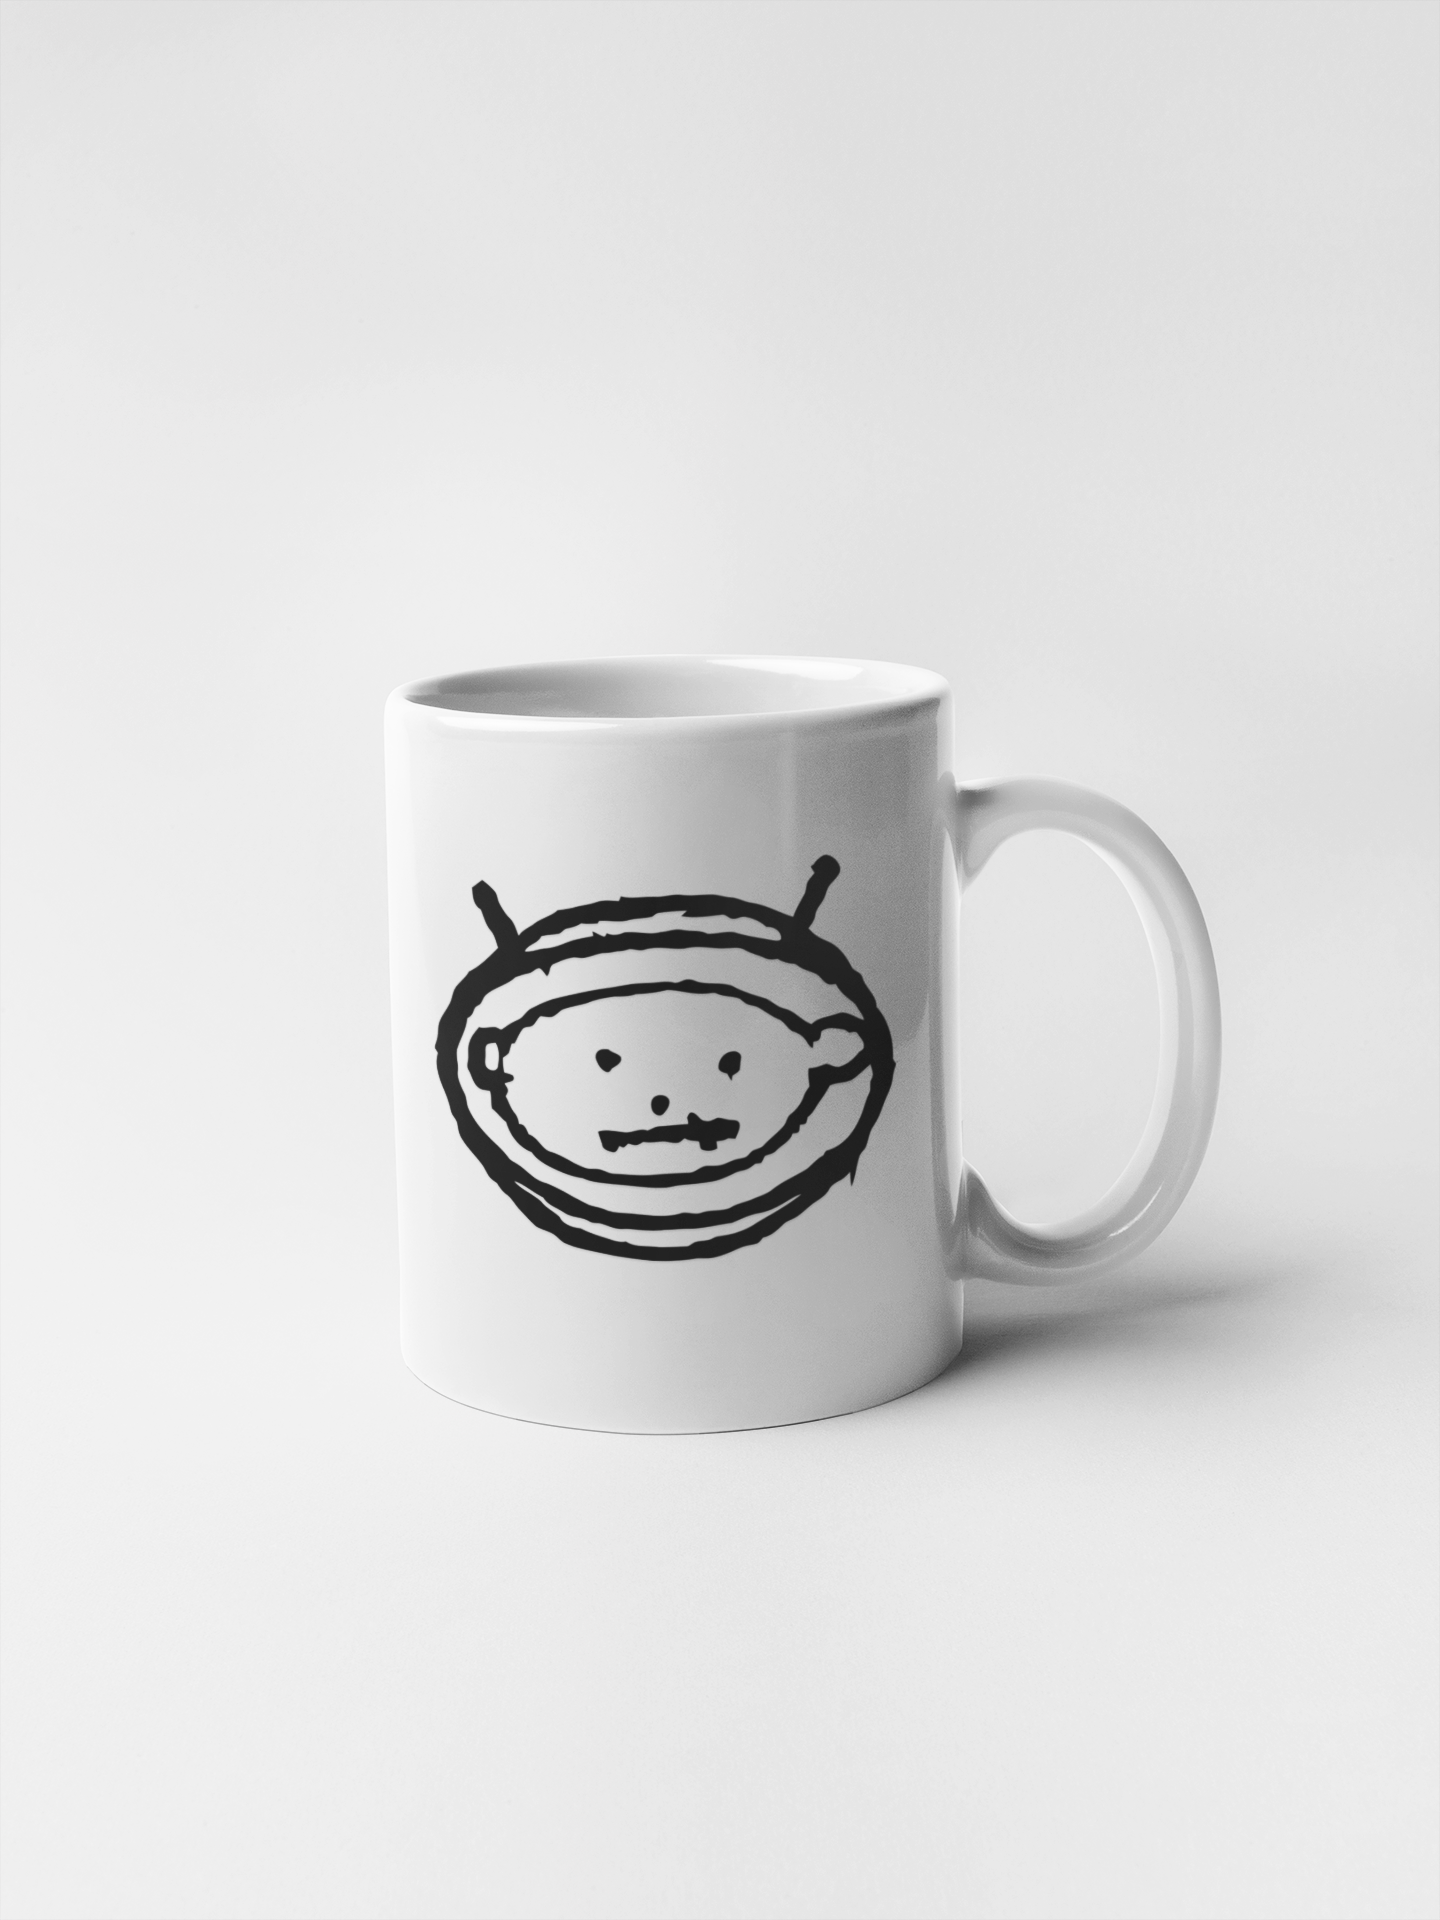 U2 Band Zooropa Logo Ceramic Coffee Mugs